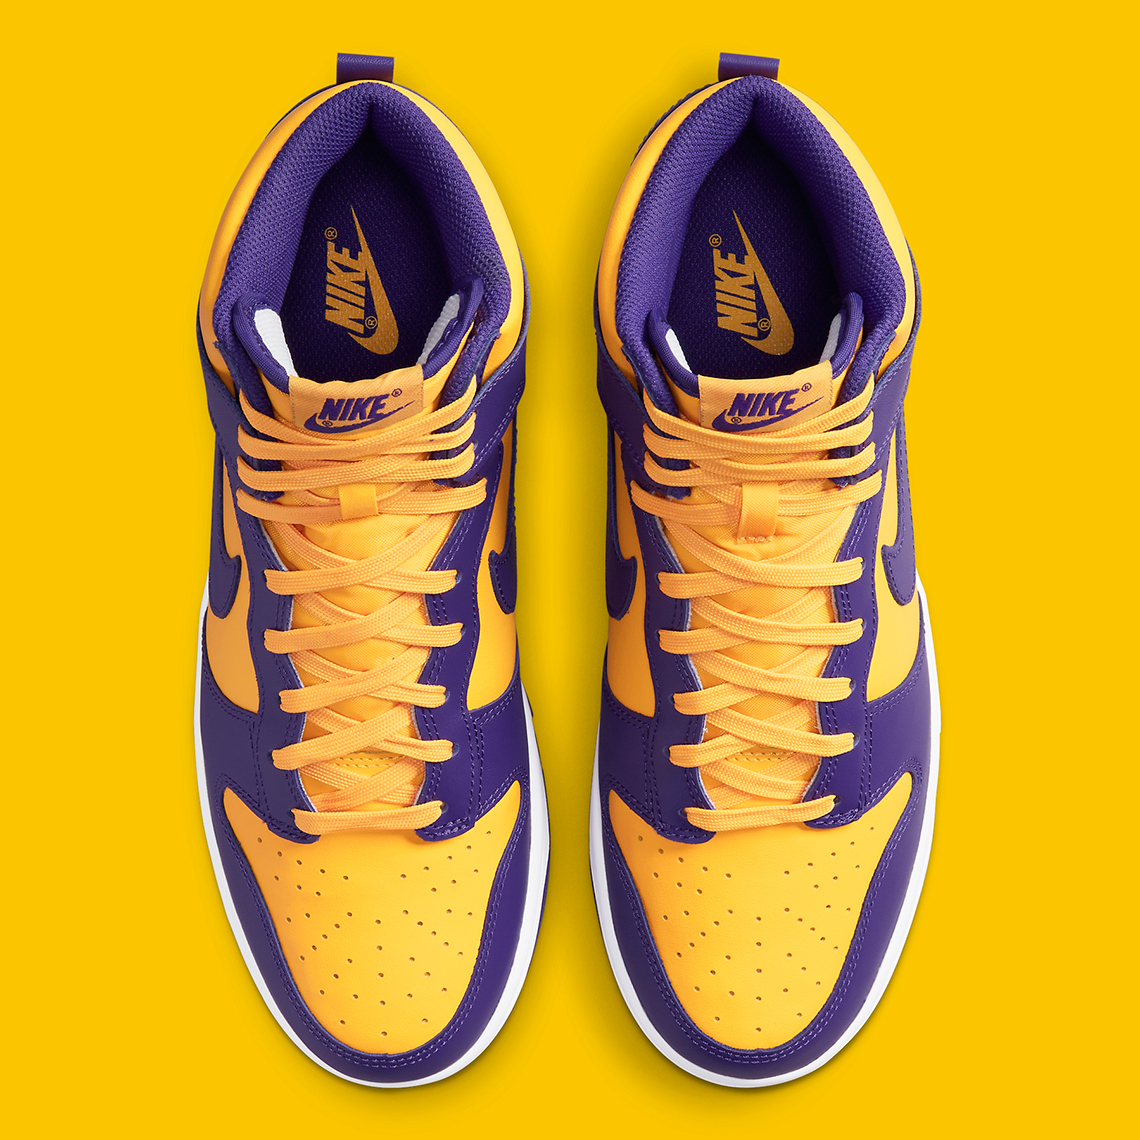 nike-dunk-high-purple-yellow-dd1399-500-release-date-3.jpg